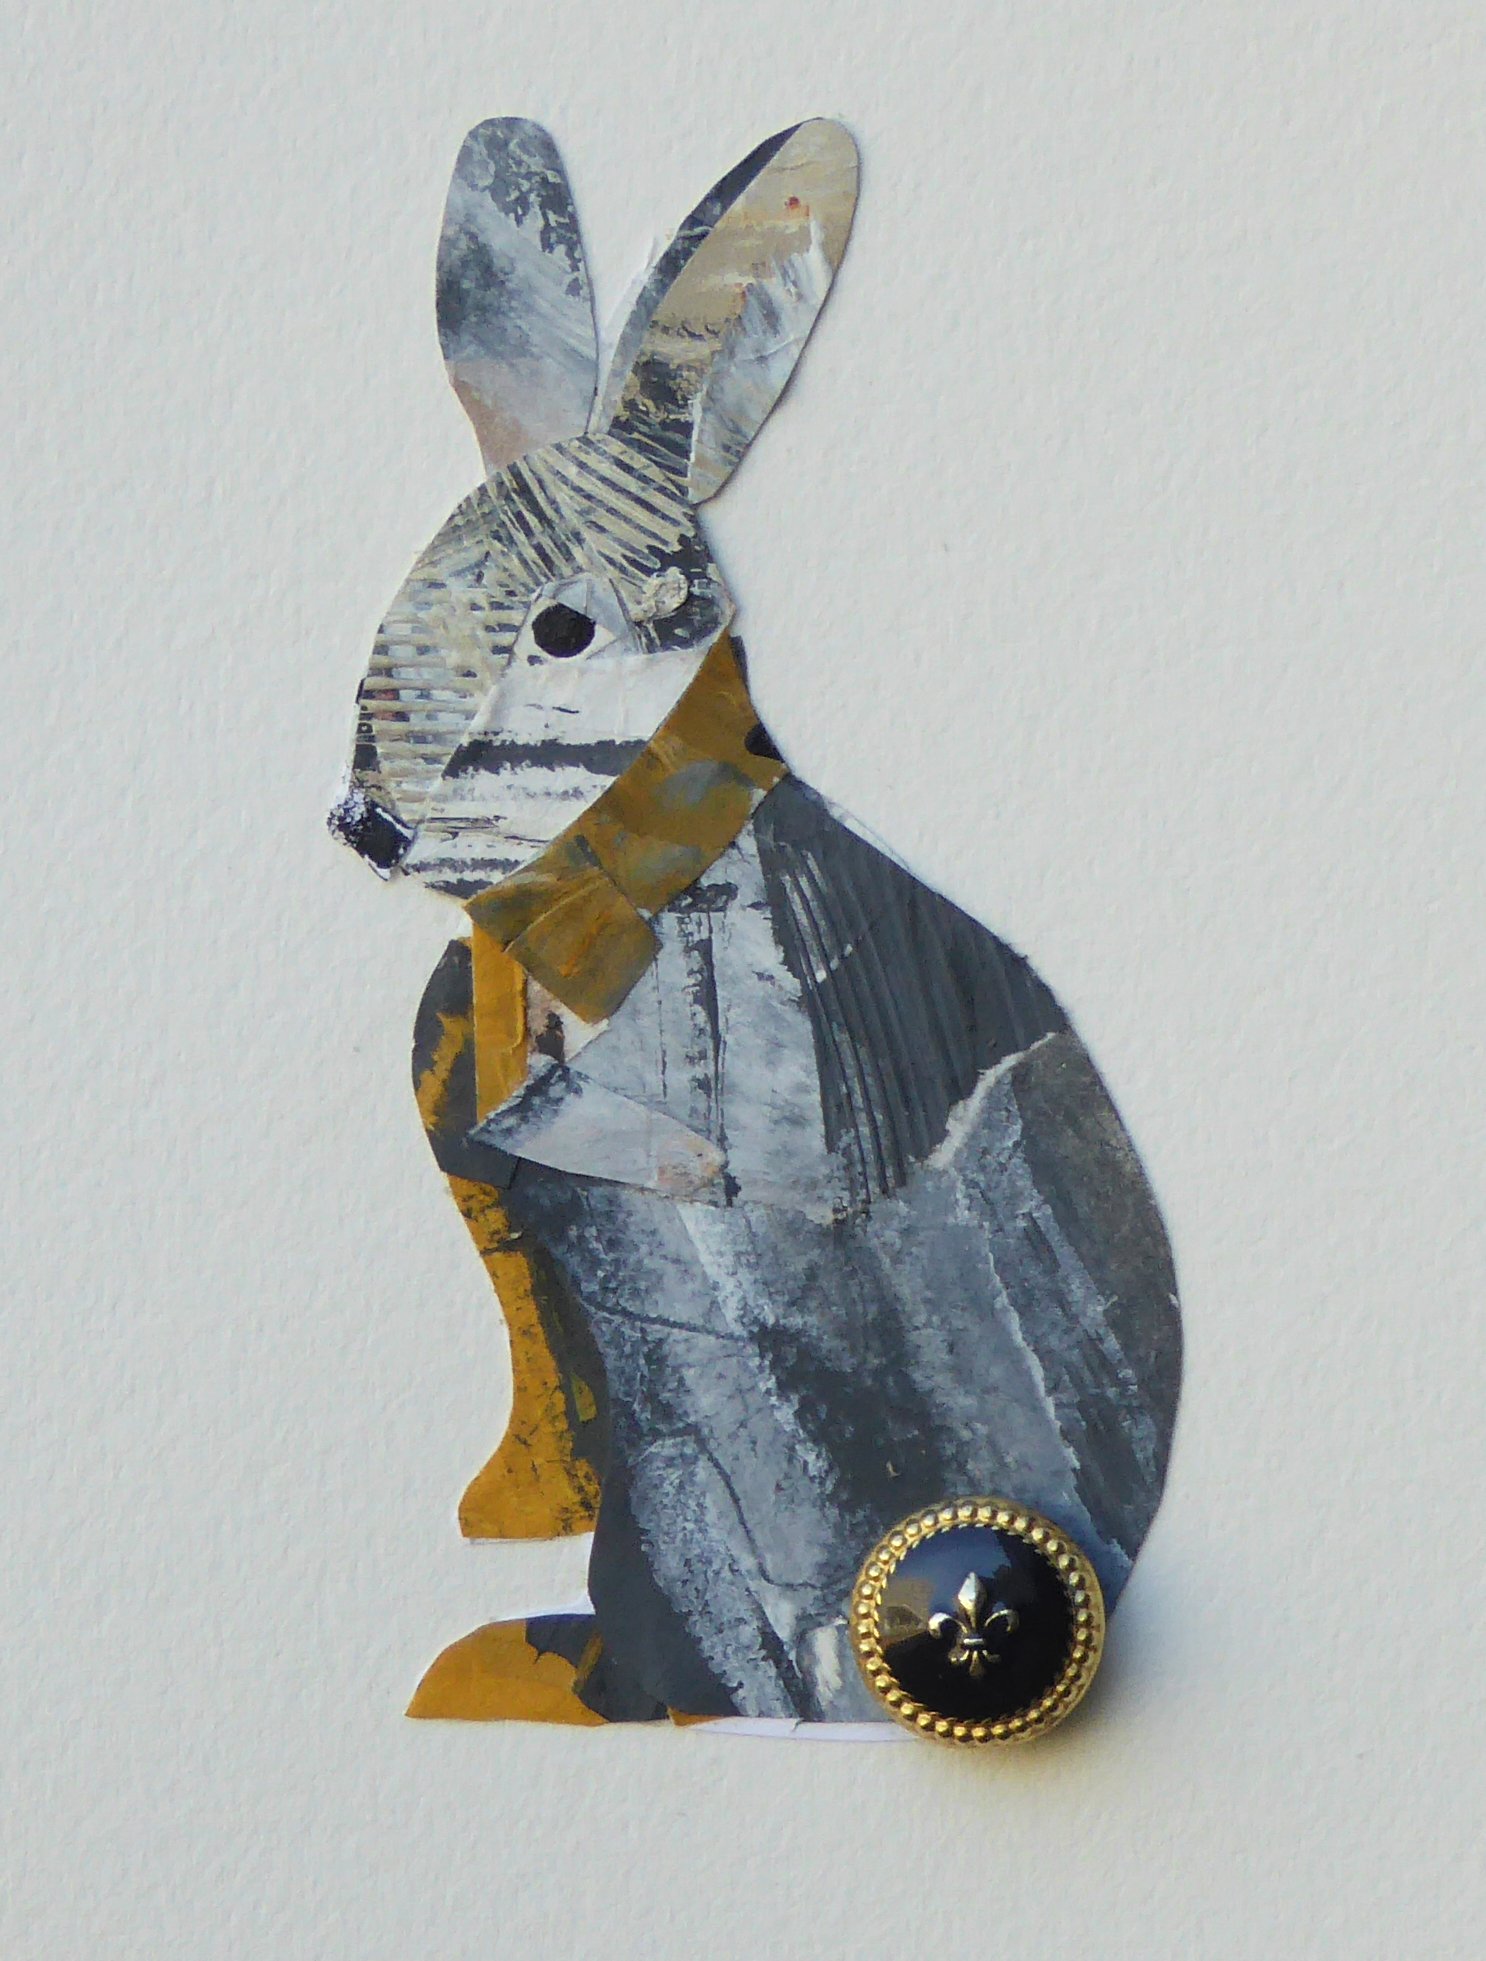 NOLA Rabbit. 7"h x 5"w, framed 10"h x 8"w